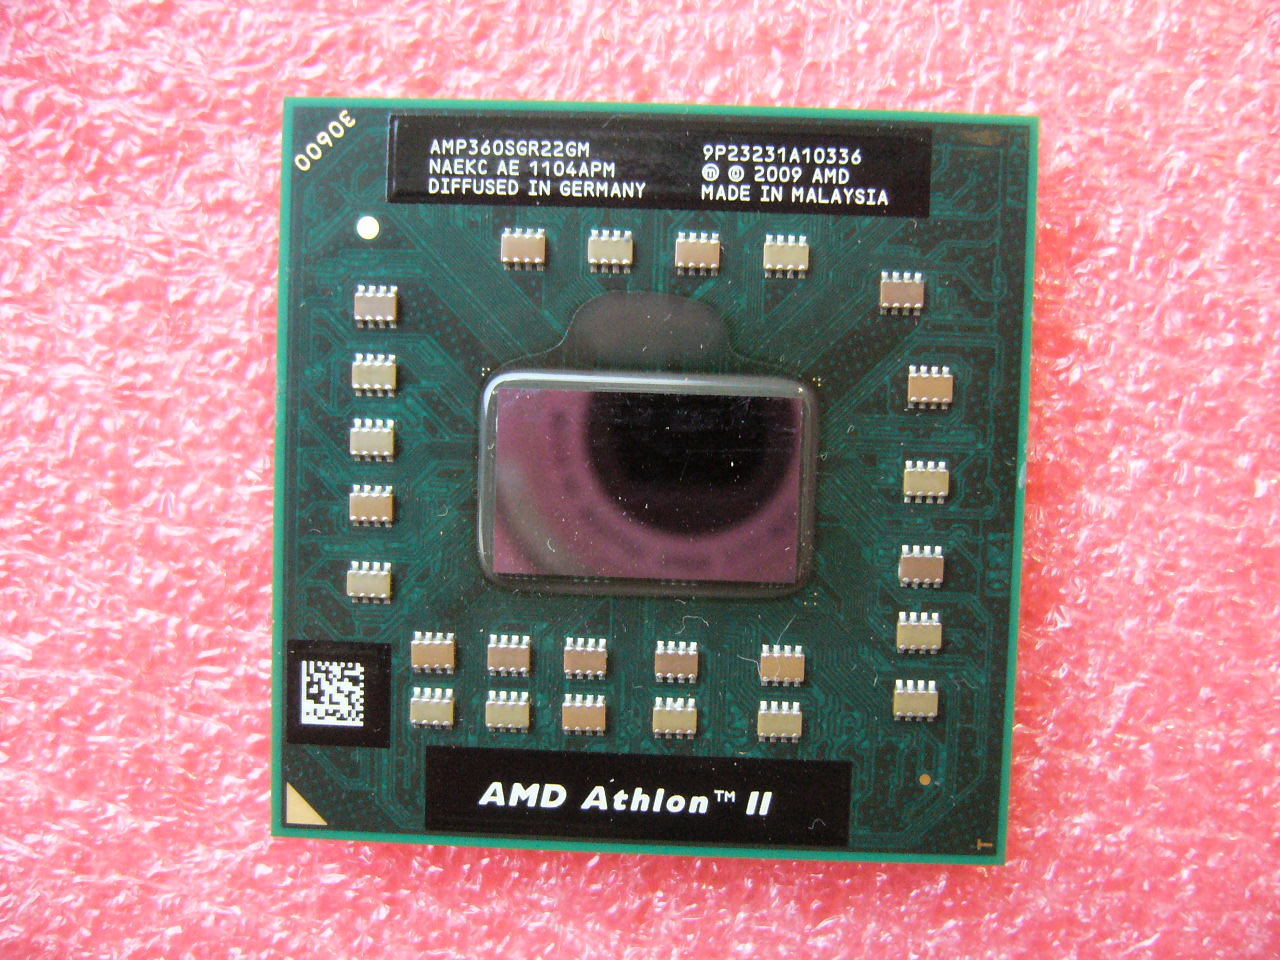 QTY 1x AMD Athlon II P360 2.3GHz Dual-Core (AMP360SGR22GM) Laptop CPU Socket S1 - Click Image to Close